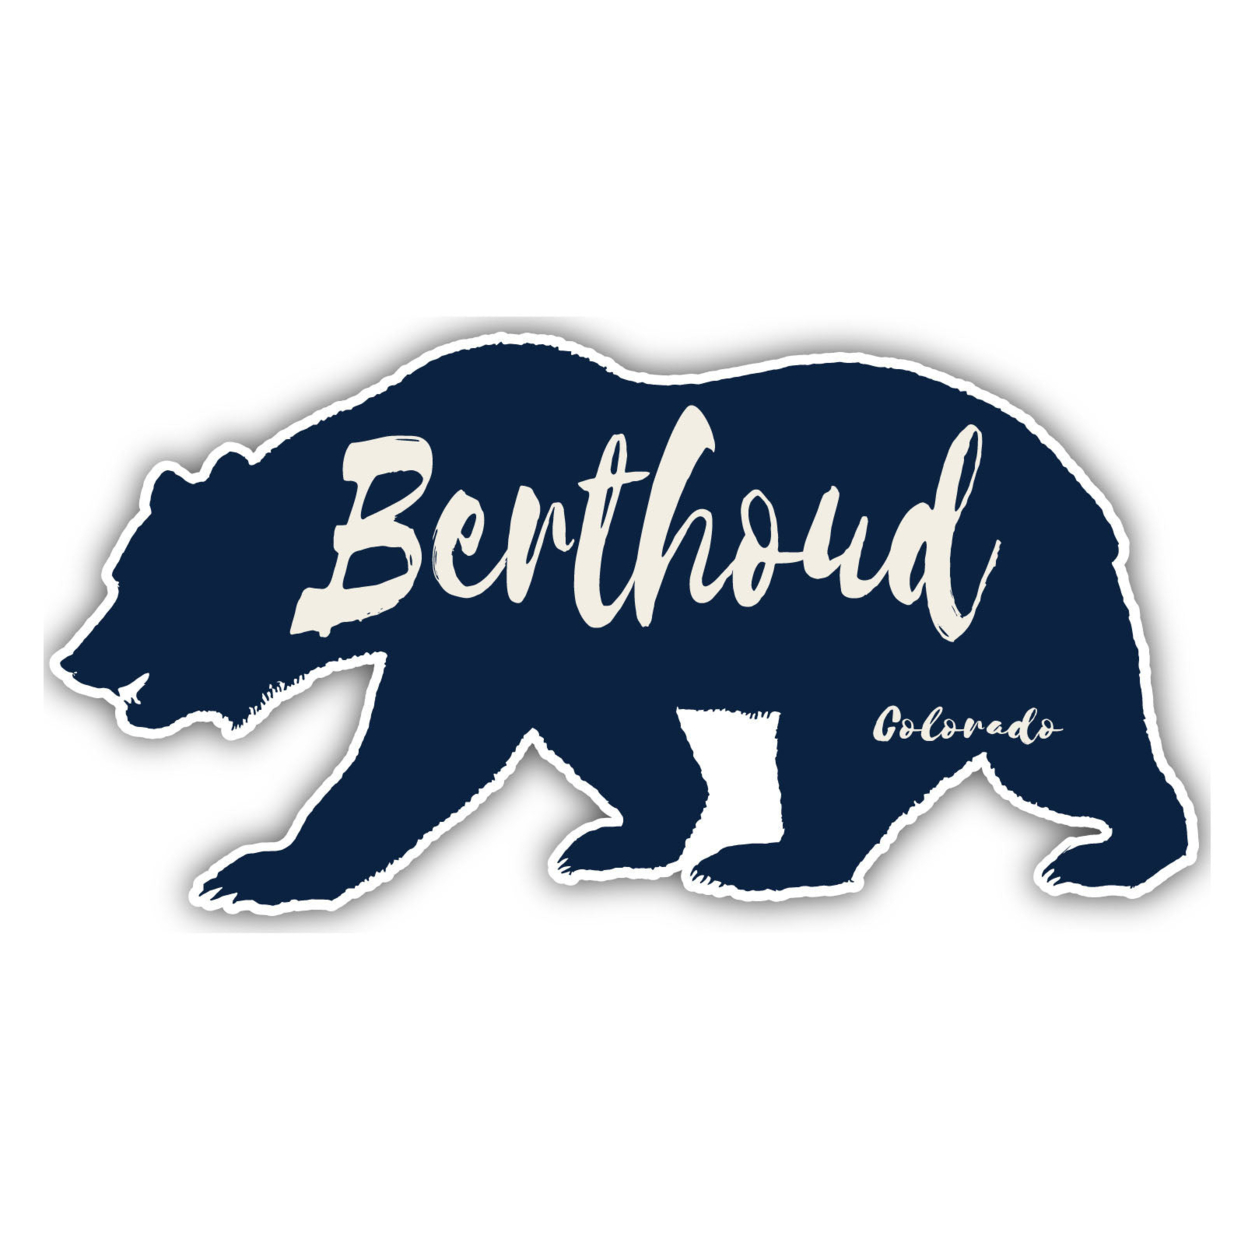 Berthoud Colorado Souvenir Decorative Stickers (Choose Theme And Size) - 4-Pack, 6-Inch, Tent